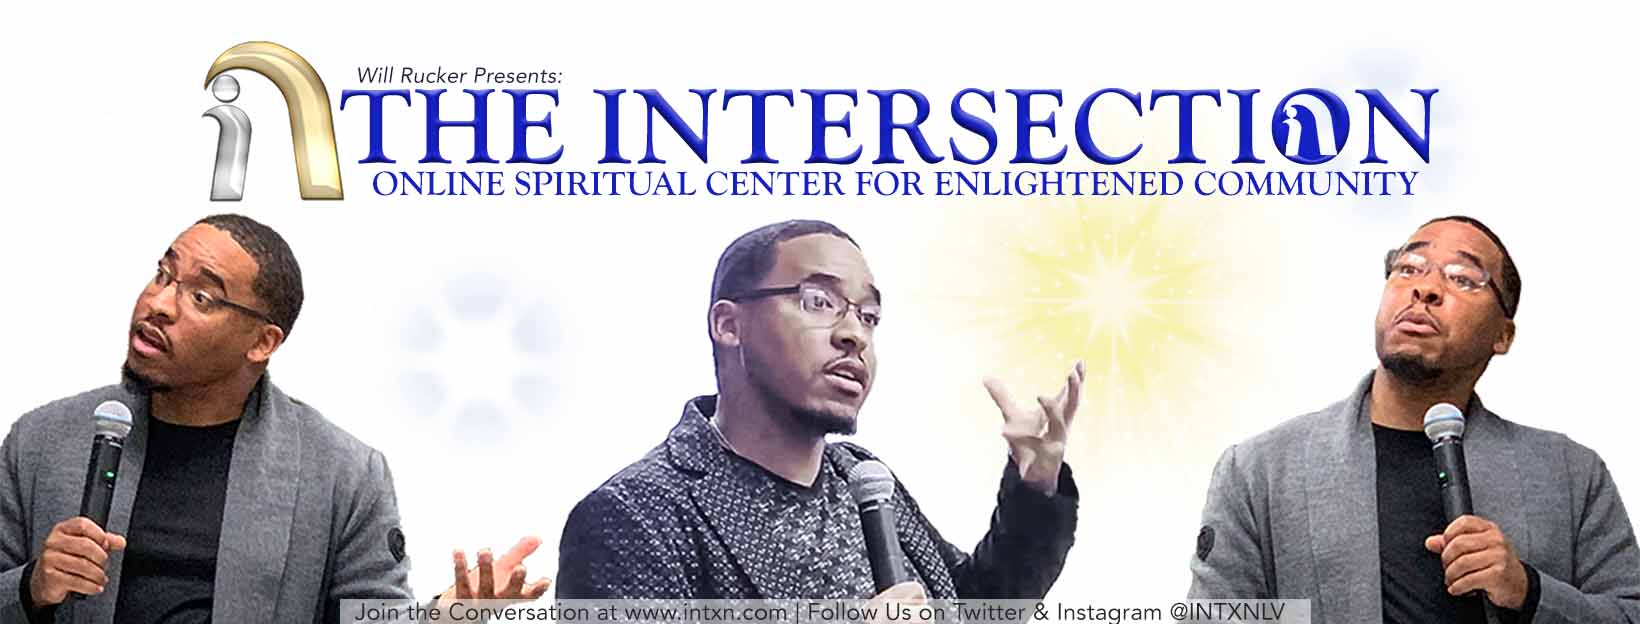 Intersectional Spiritual Community